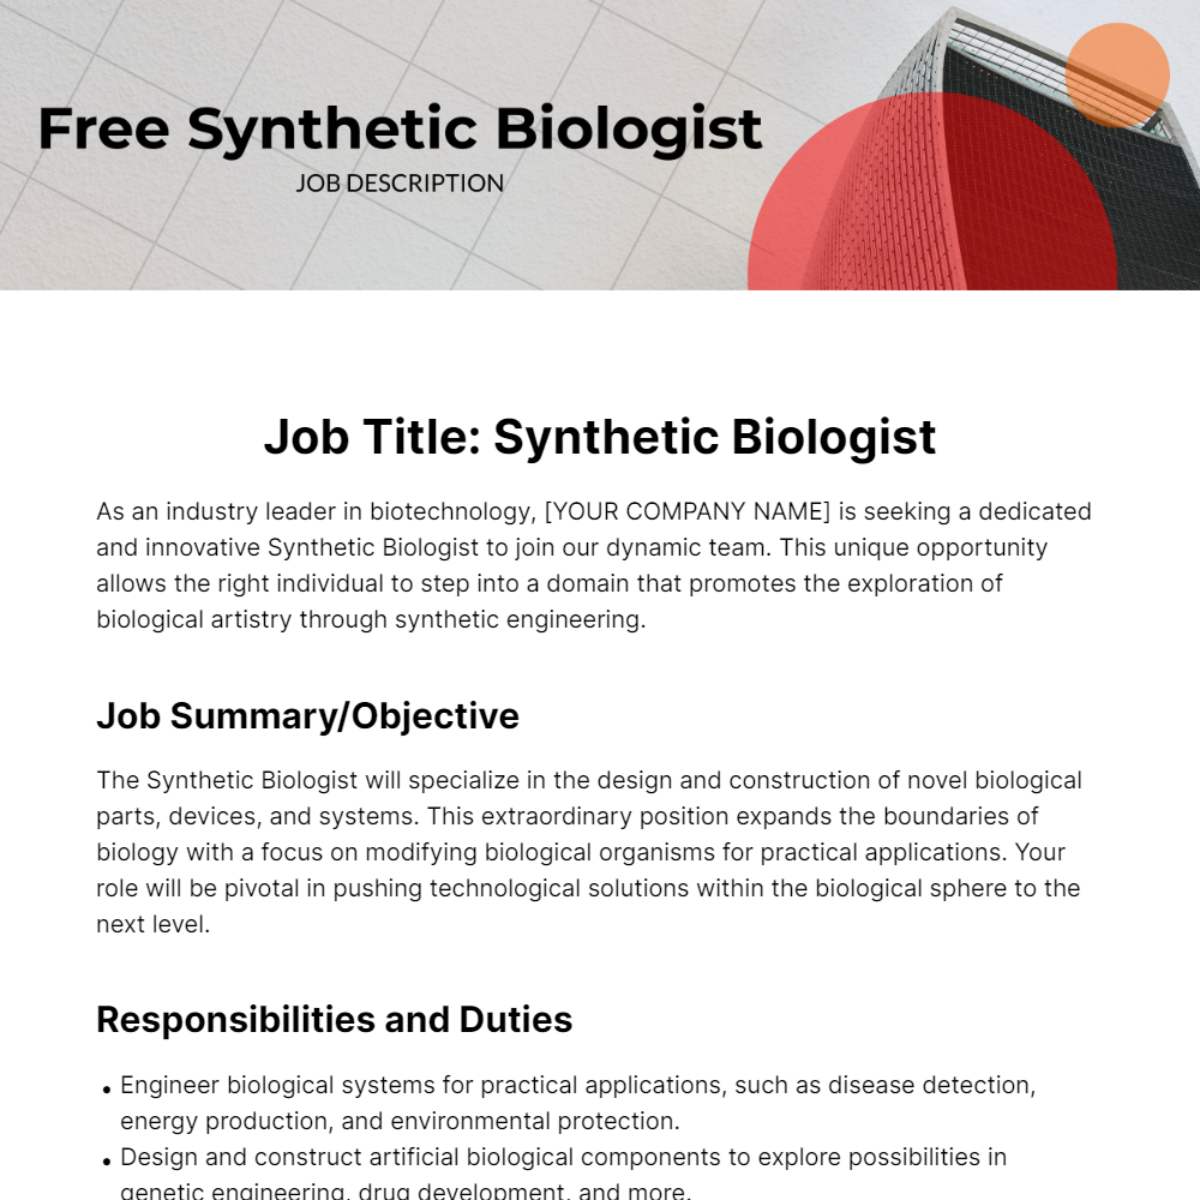 Free Synthetic Biologist Job Description Template